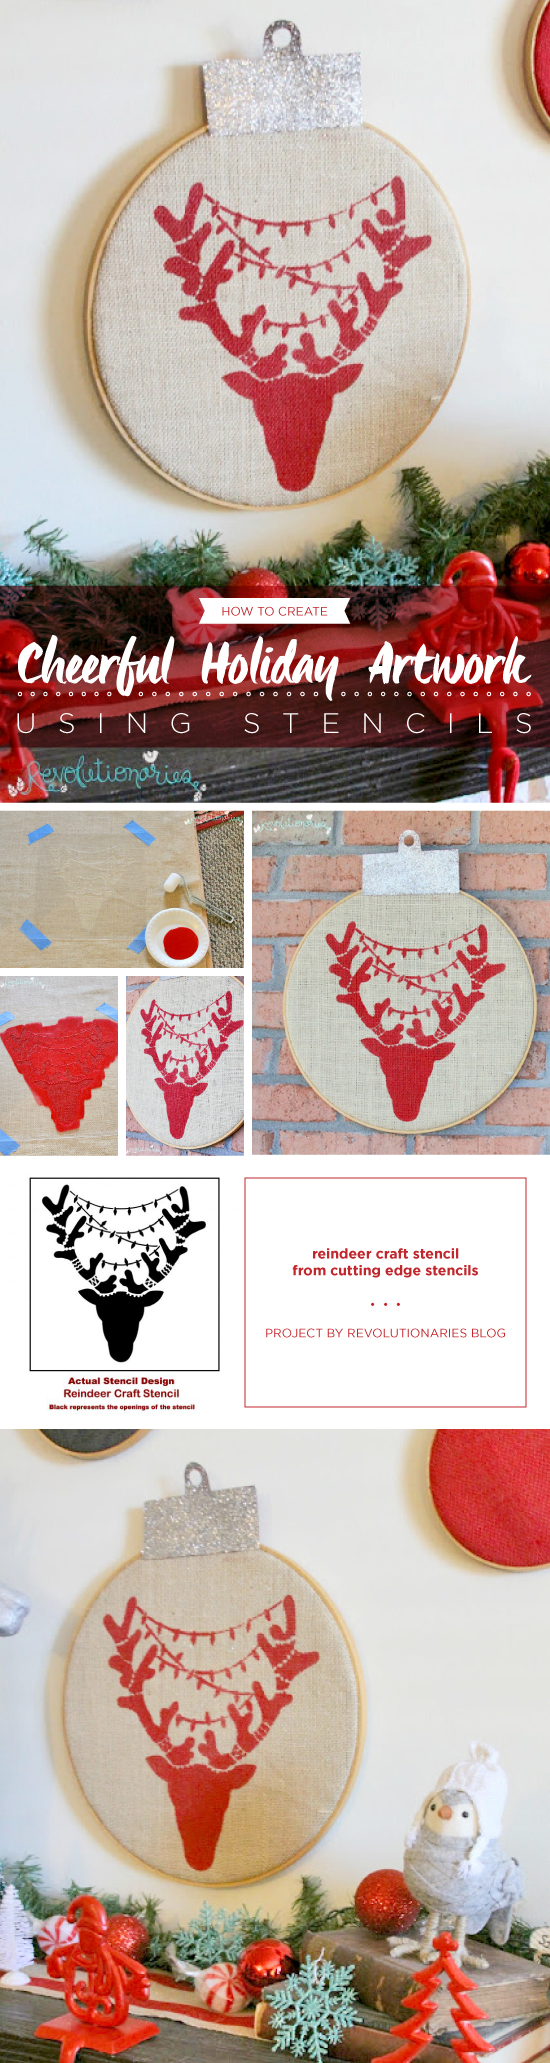 Cutting Edge Stencils shares DIY stenciled Christmas decor using a new Holiday Stencil, the Reindeer Craft pattern. http://www.cuttingedgestencils.com/reindeer-holiday-stencil-designs-for-diy-crafts.html